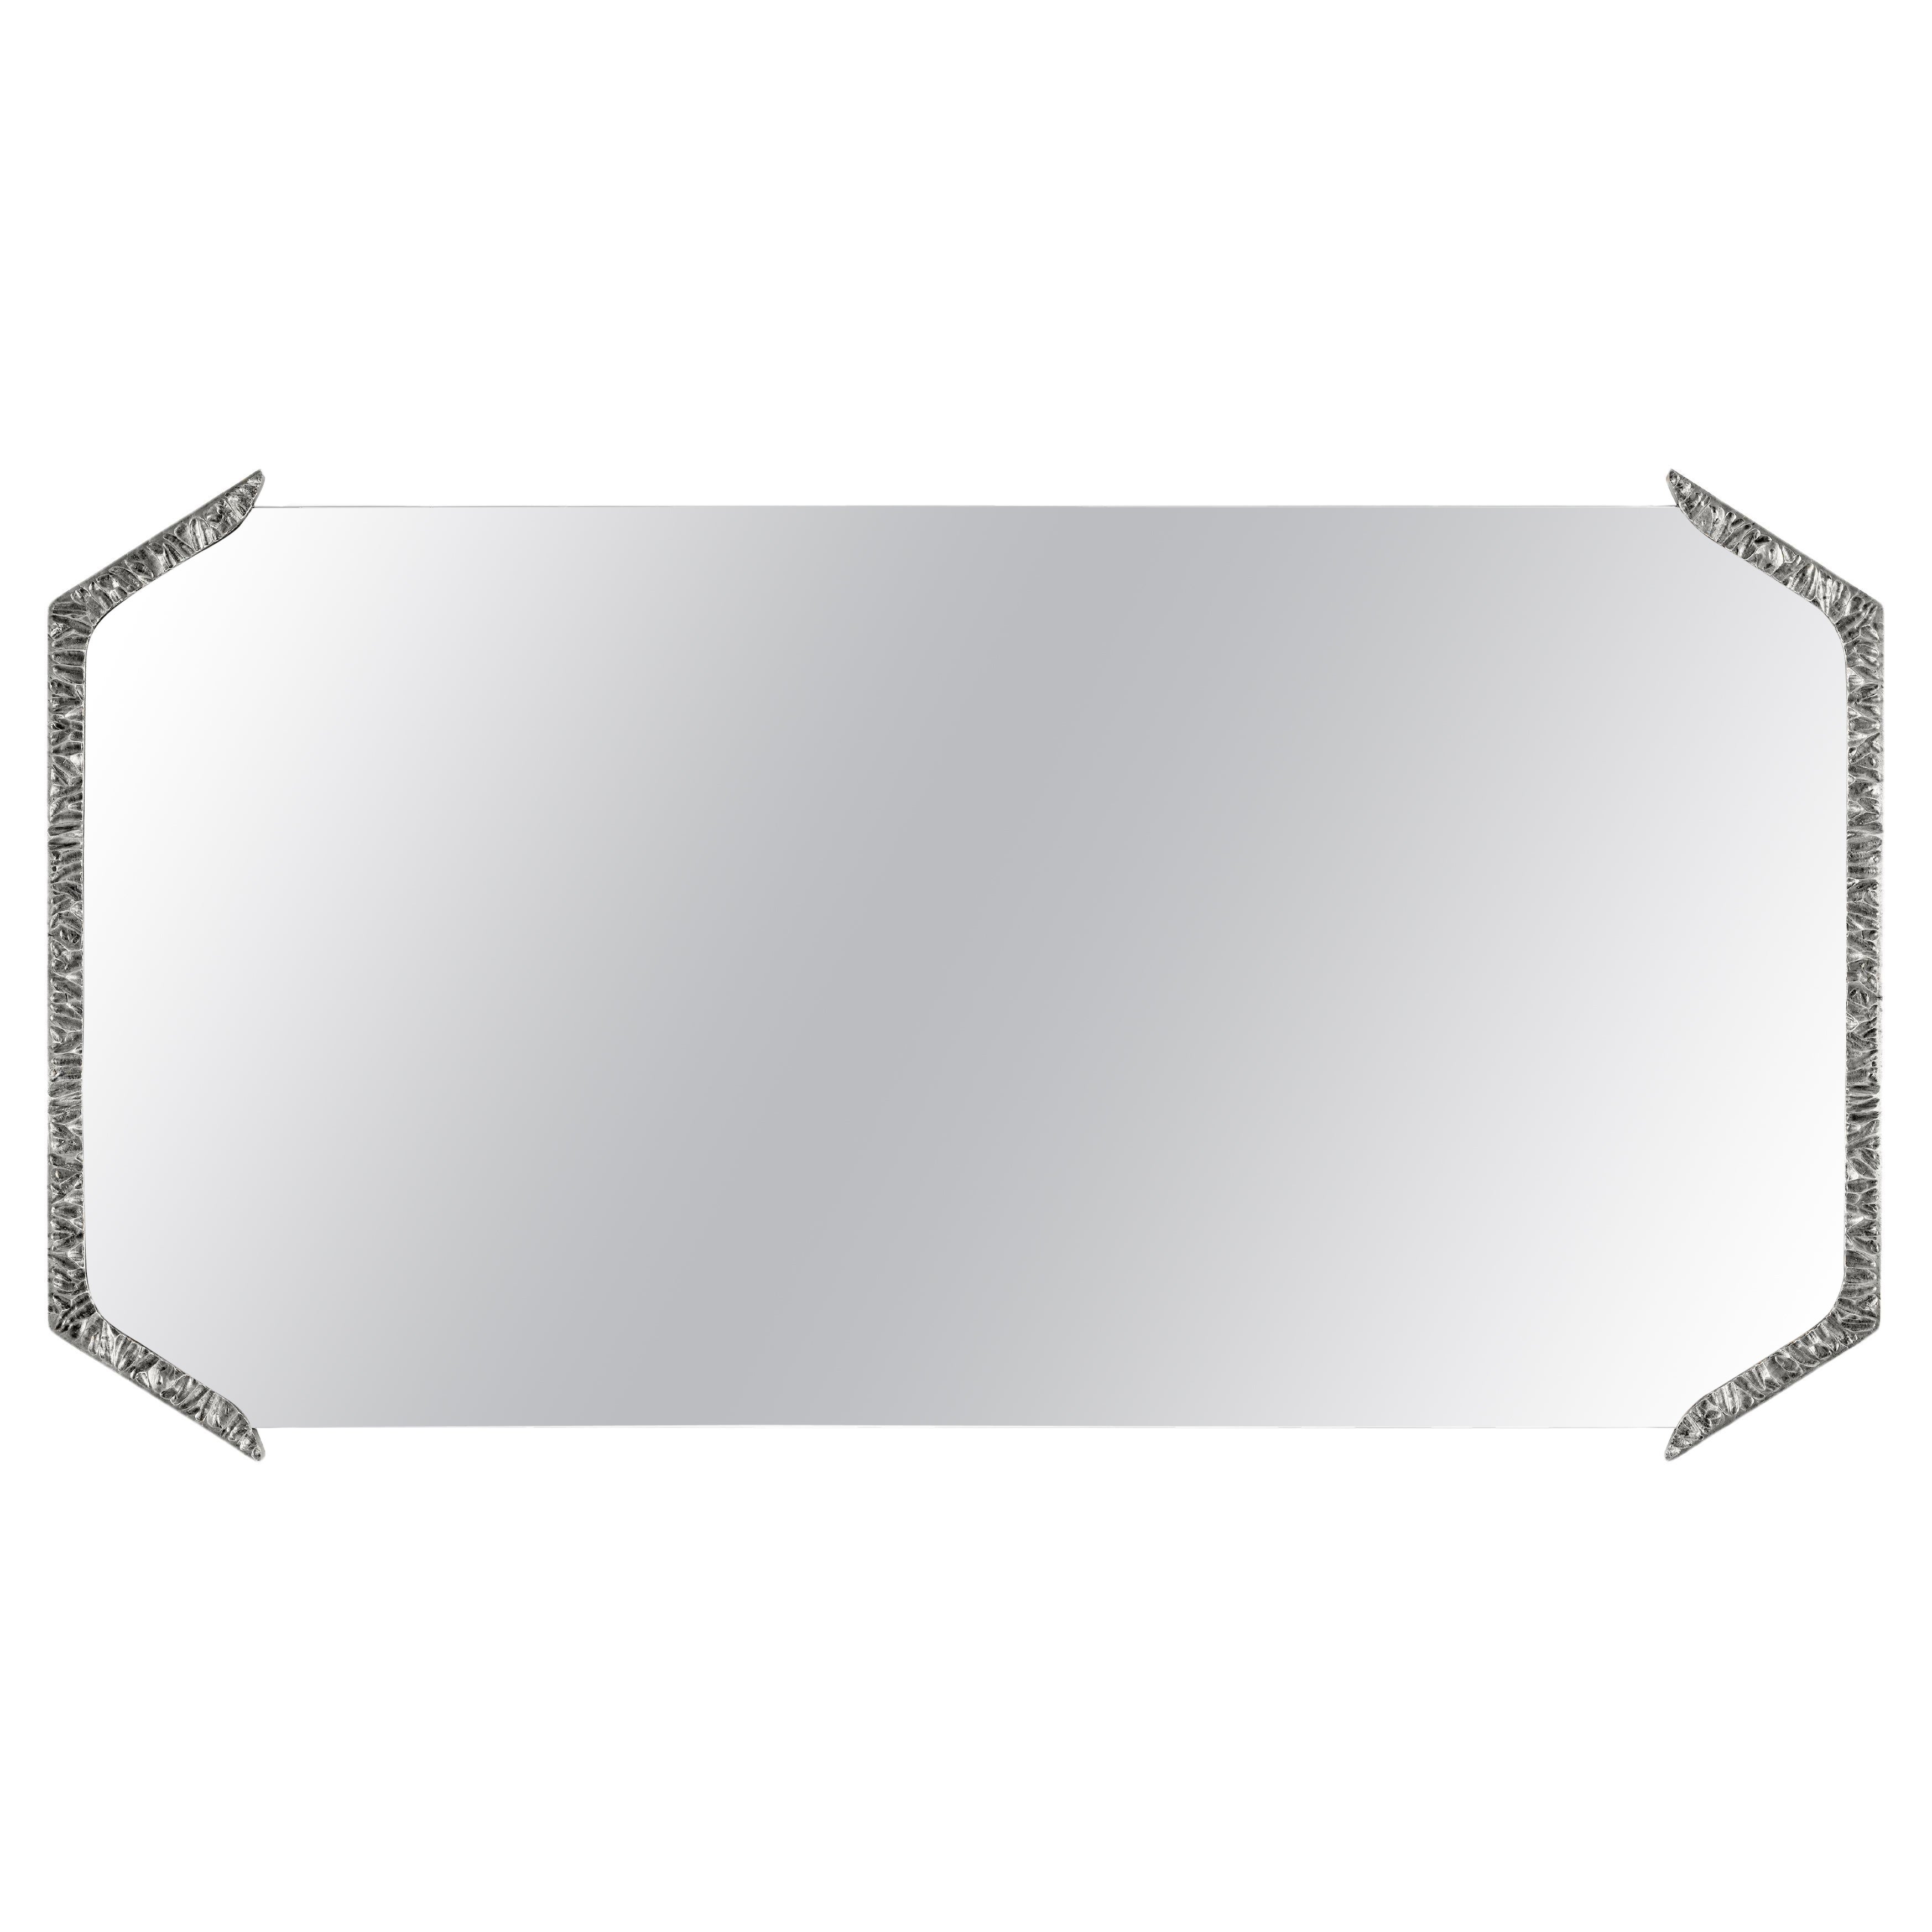 Miroir rectangulaire Alentejo Nickel par InsidherLand